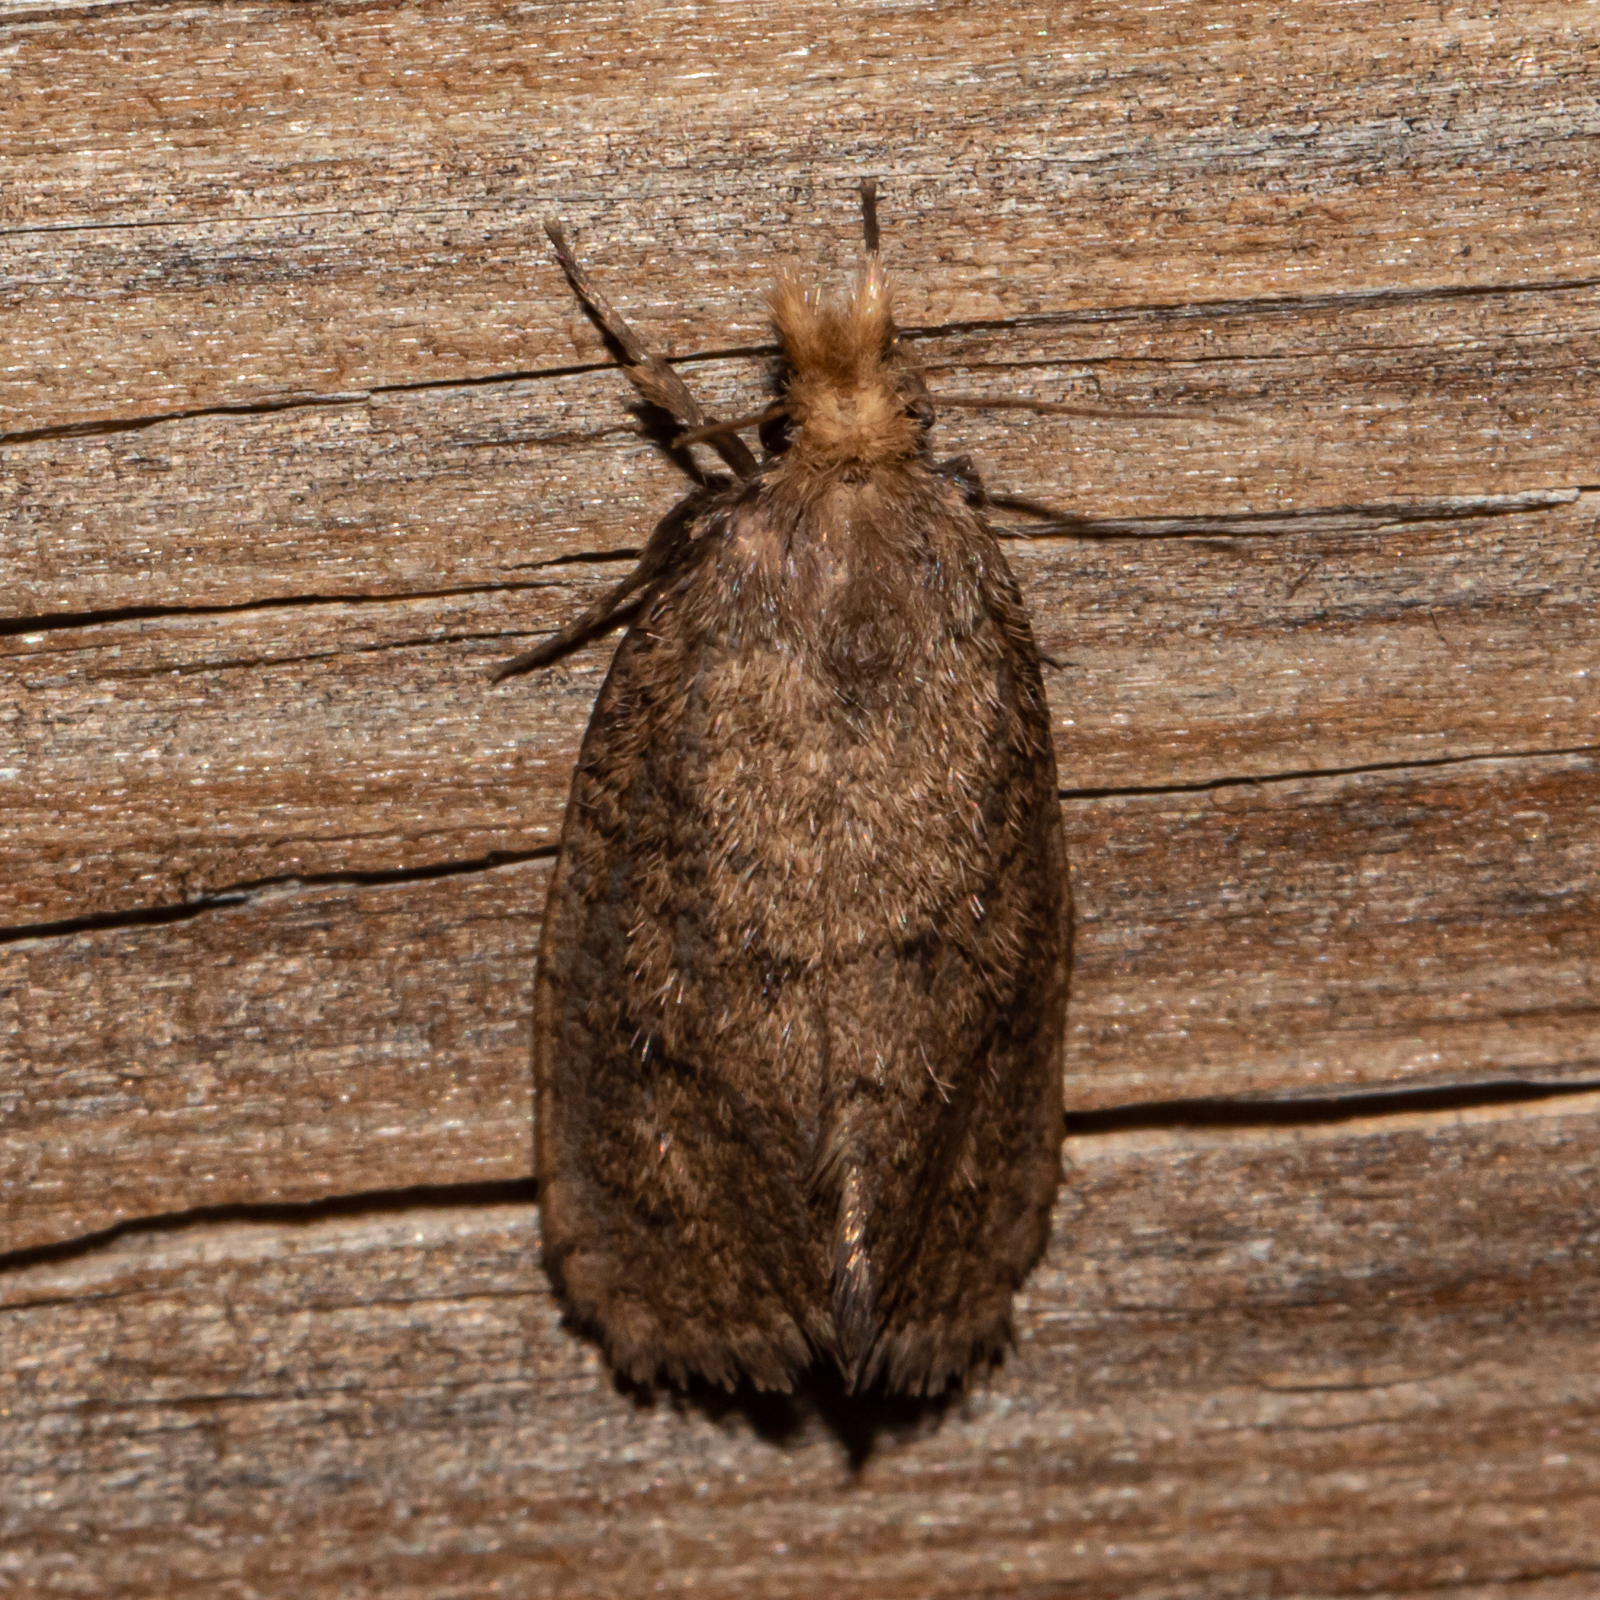 Maryland Biodiversity Project - Walsingham's Grass Tubeworm Moth ...